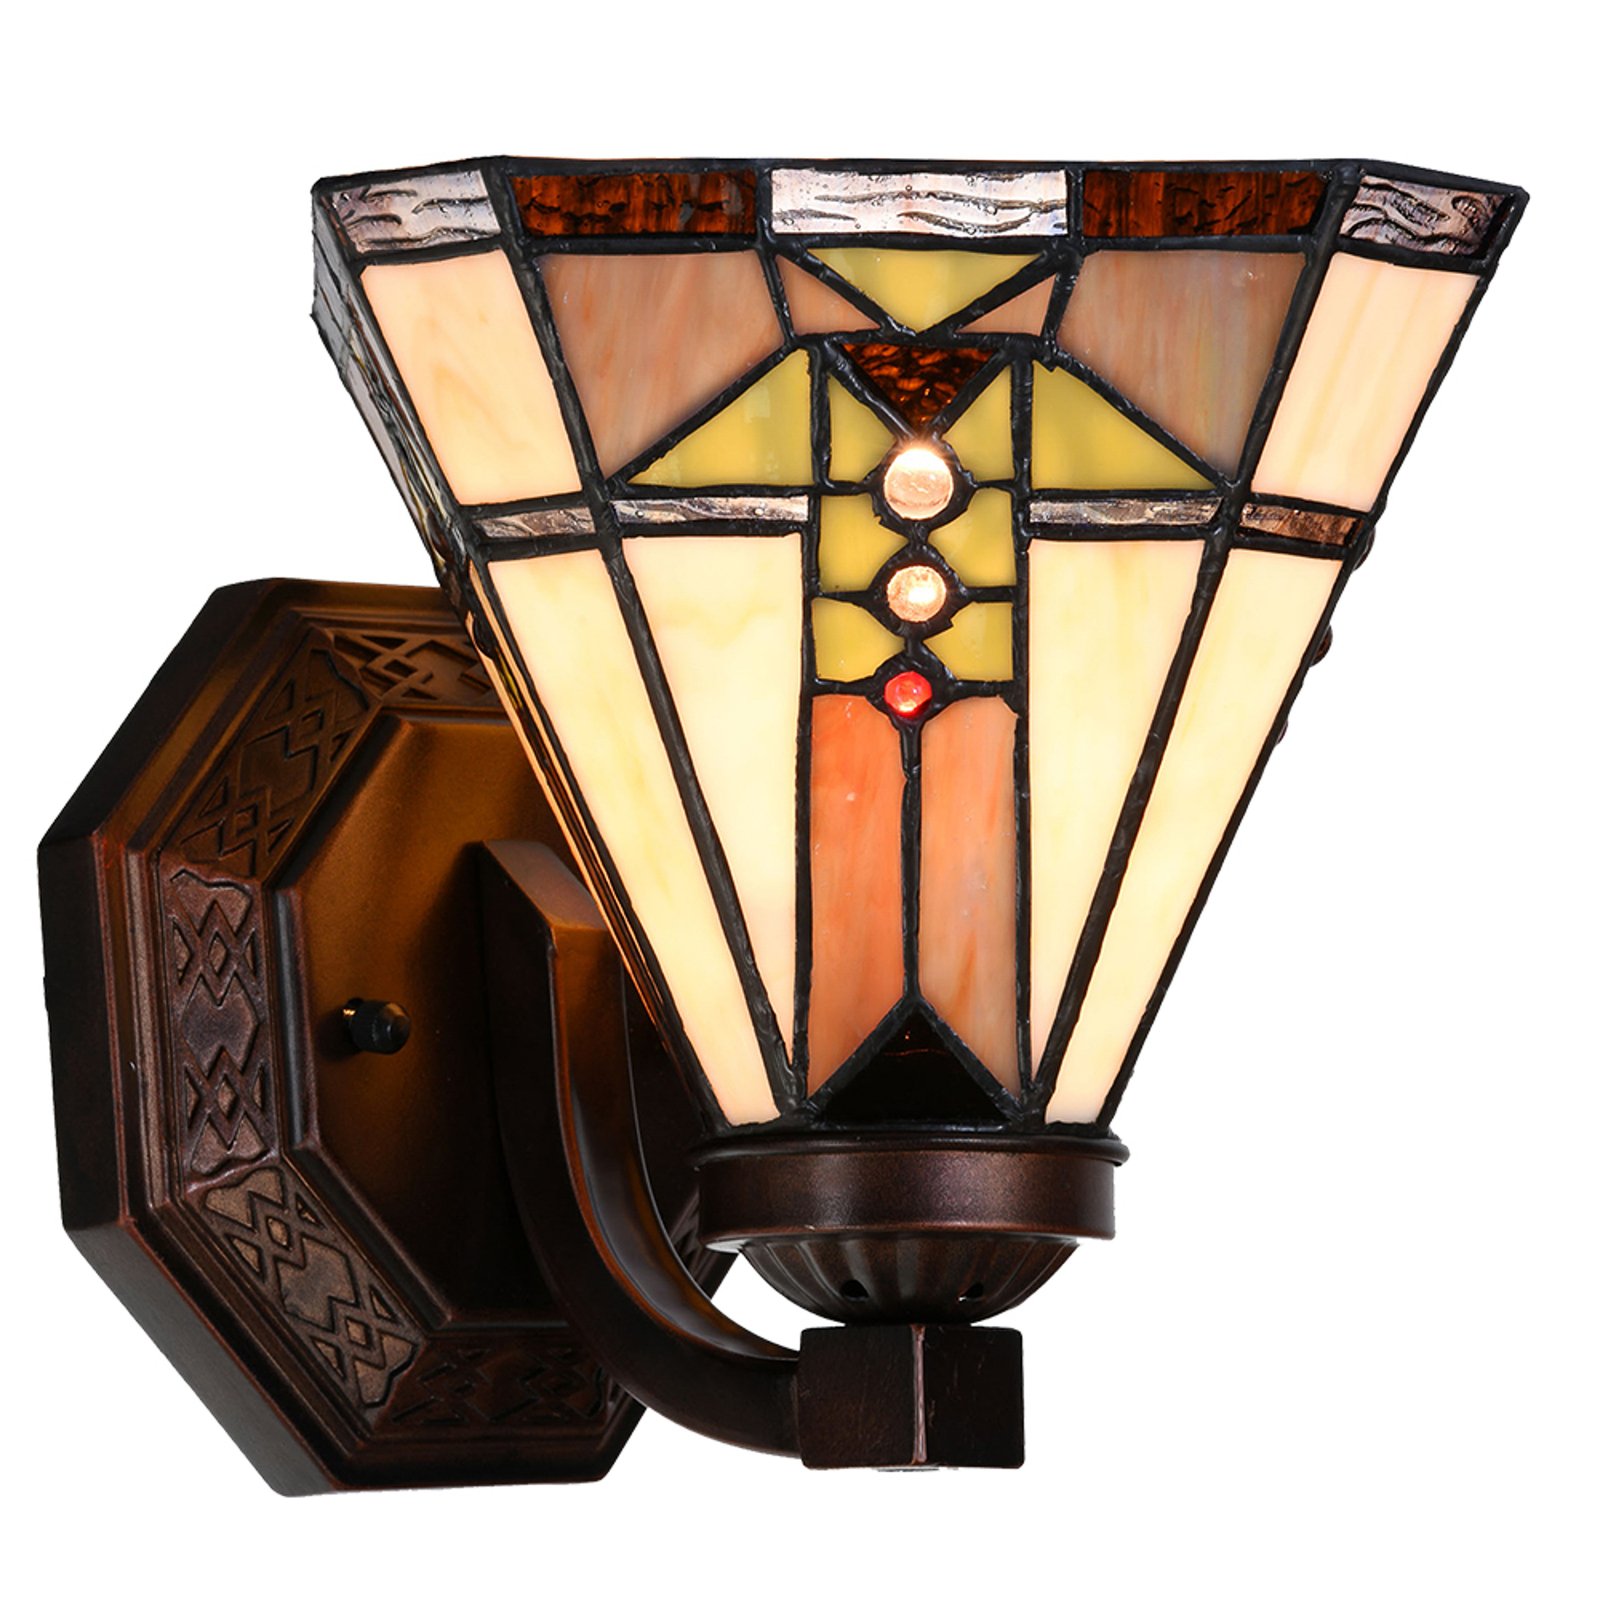 5LL-6100 Tiffany-style wall lamp, brown